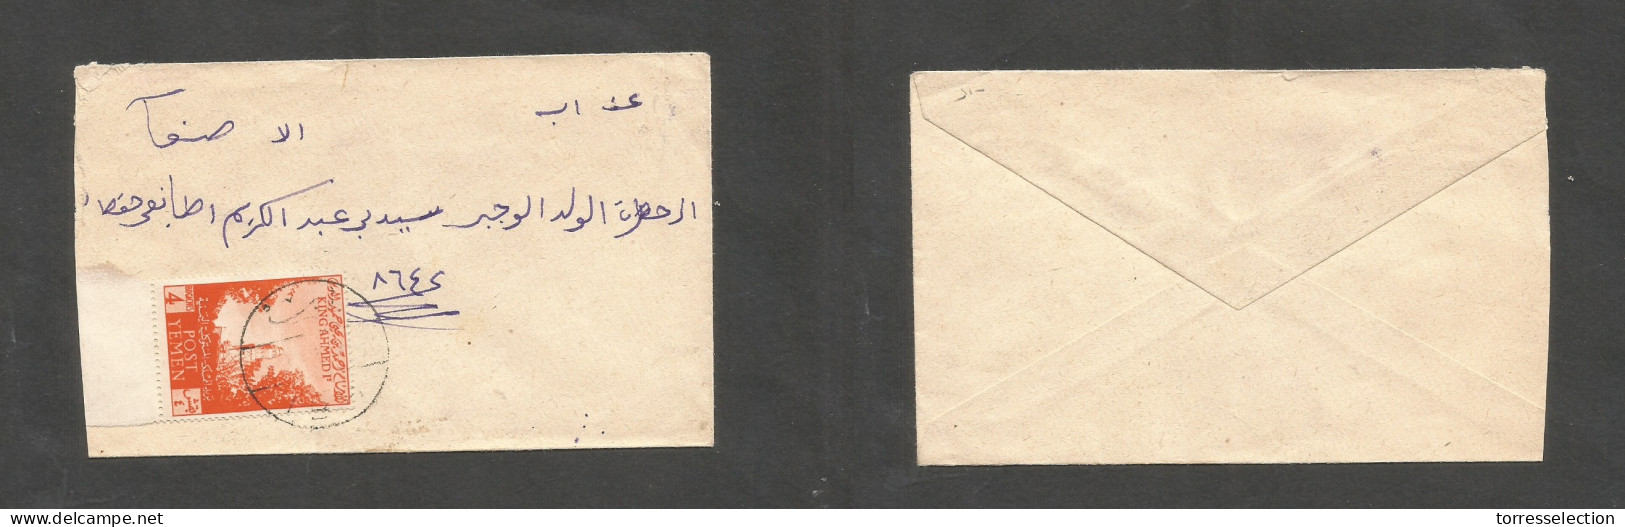 YEMEN. C. 1950s. Ibido Local Usage. Fkd 4 Bos Orange Envelope, Tied Bilingual Cds. SALE. - Yemen